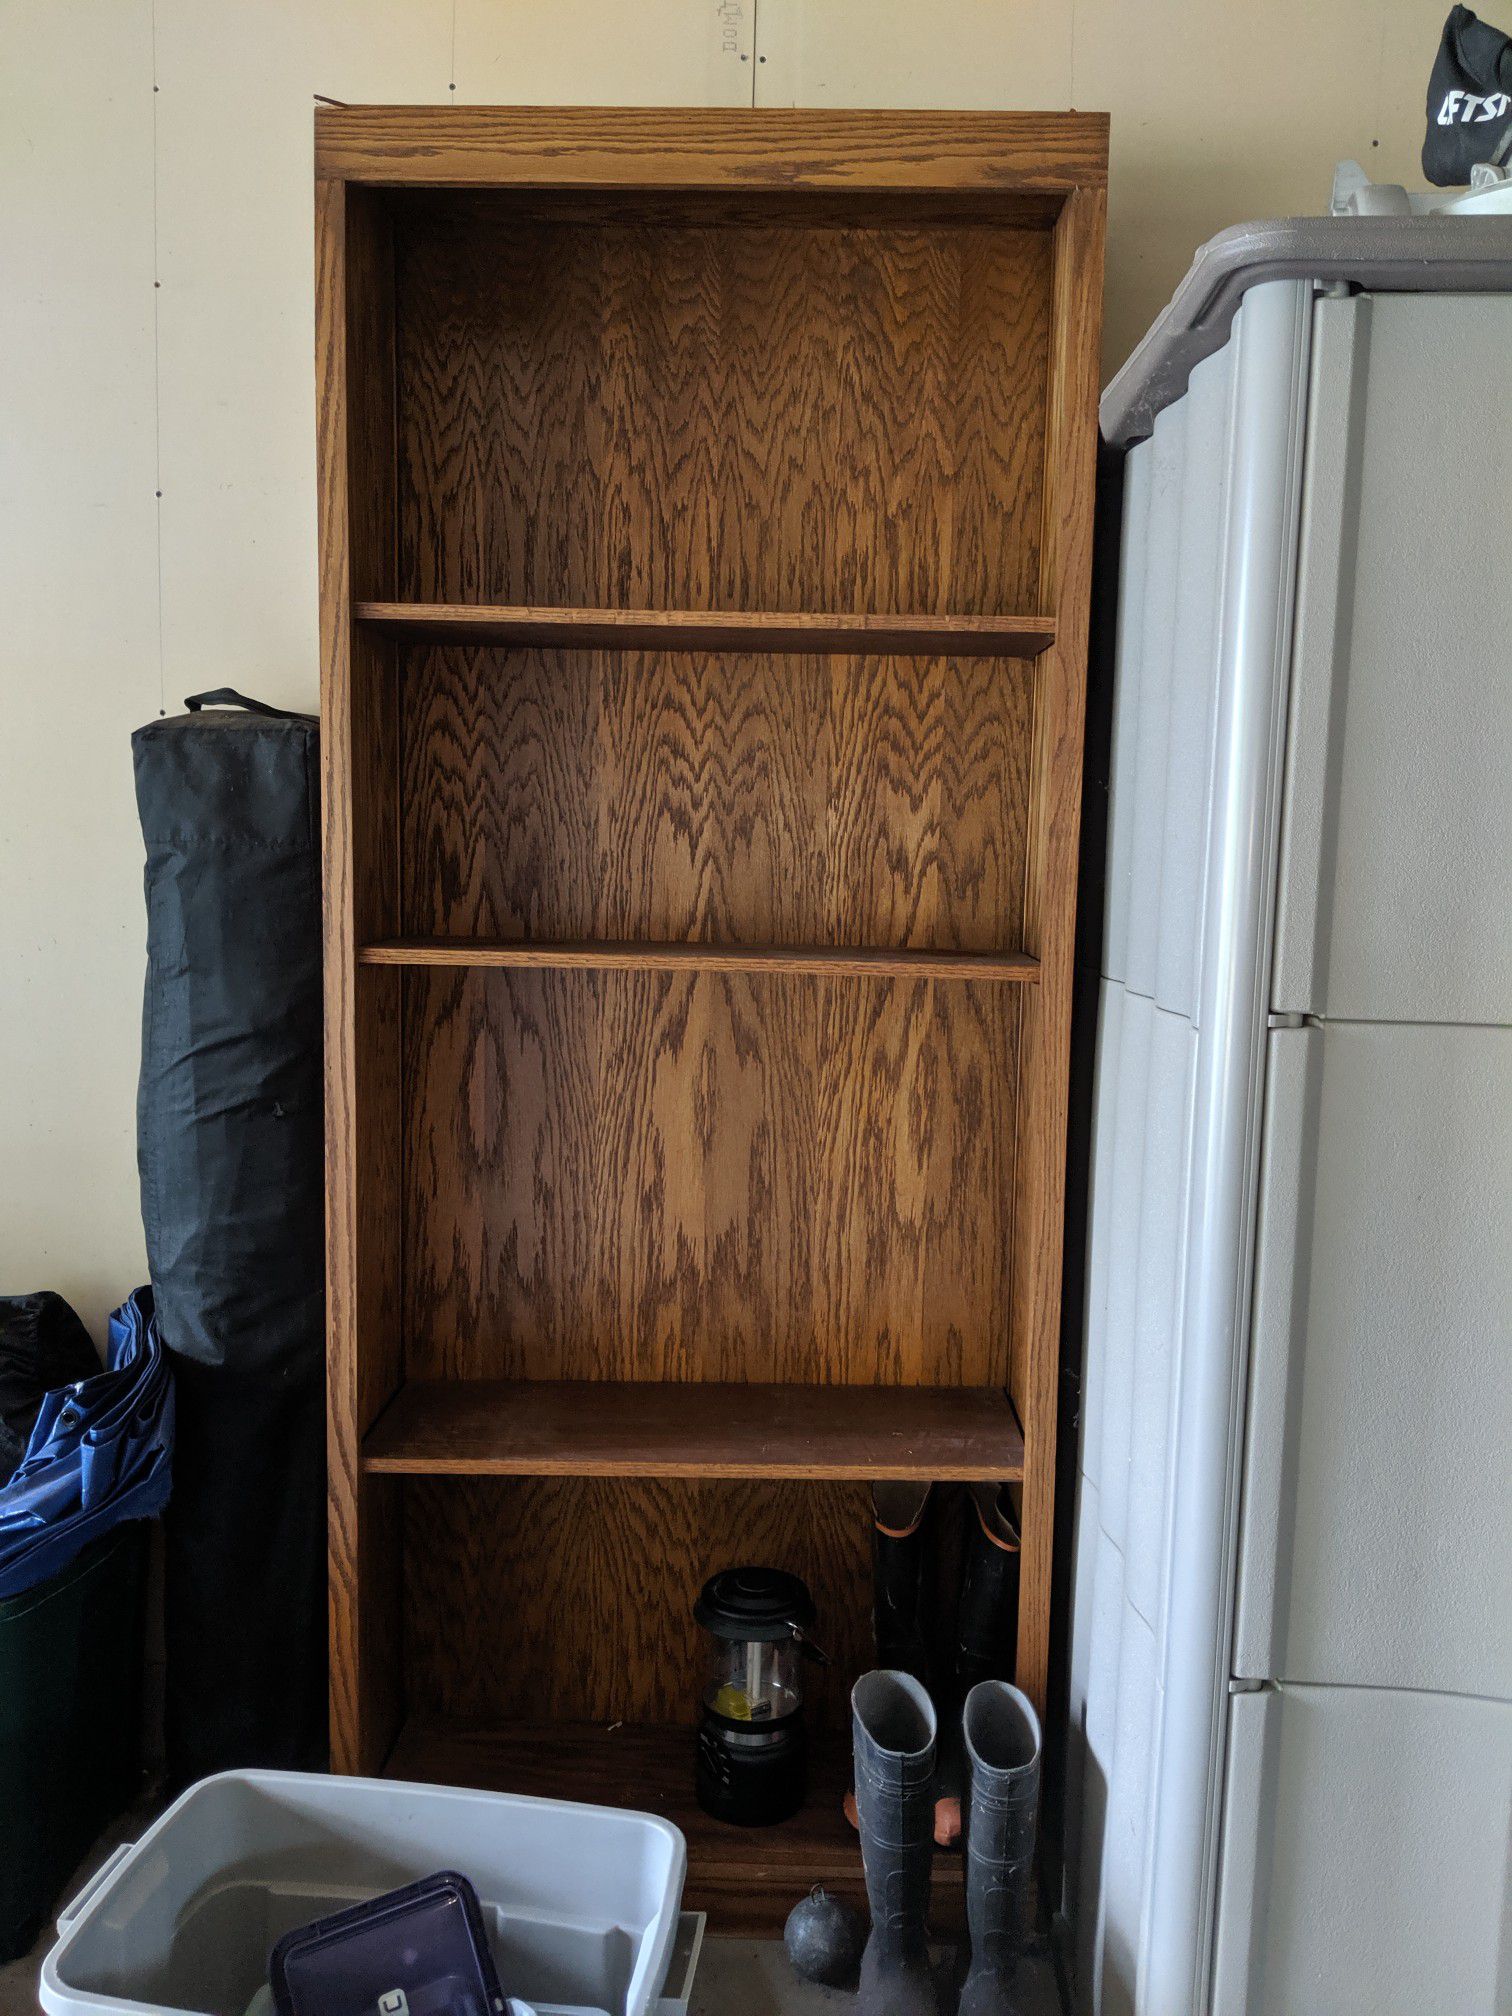 2 All Wood Bookshelves . Nice. FREE